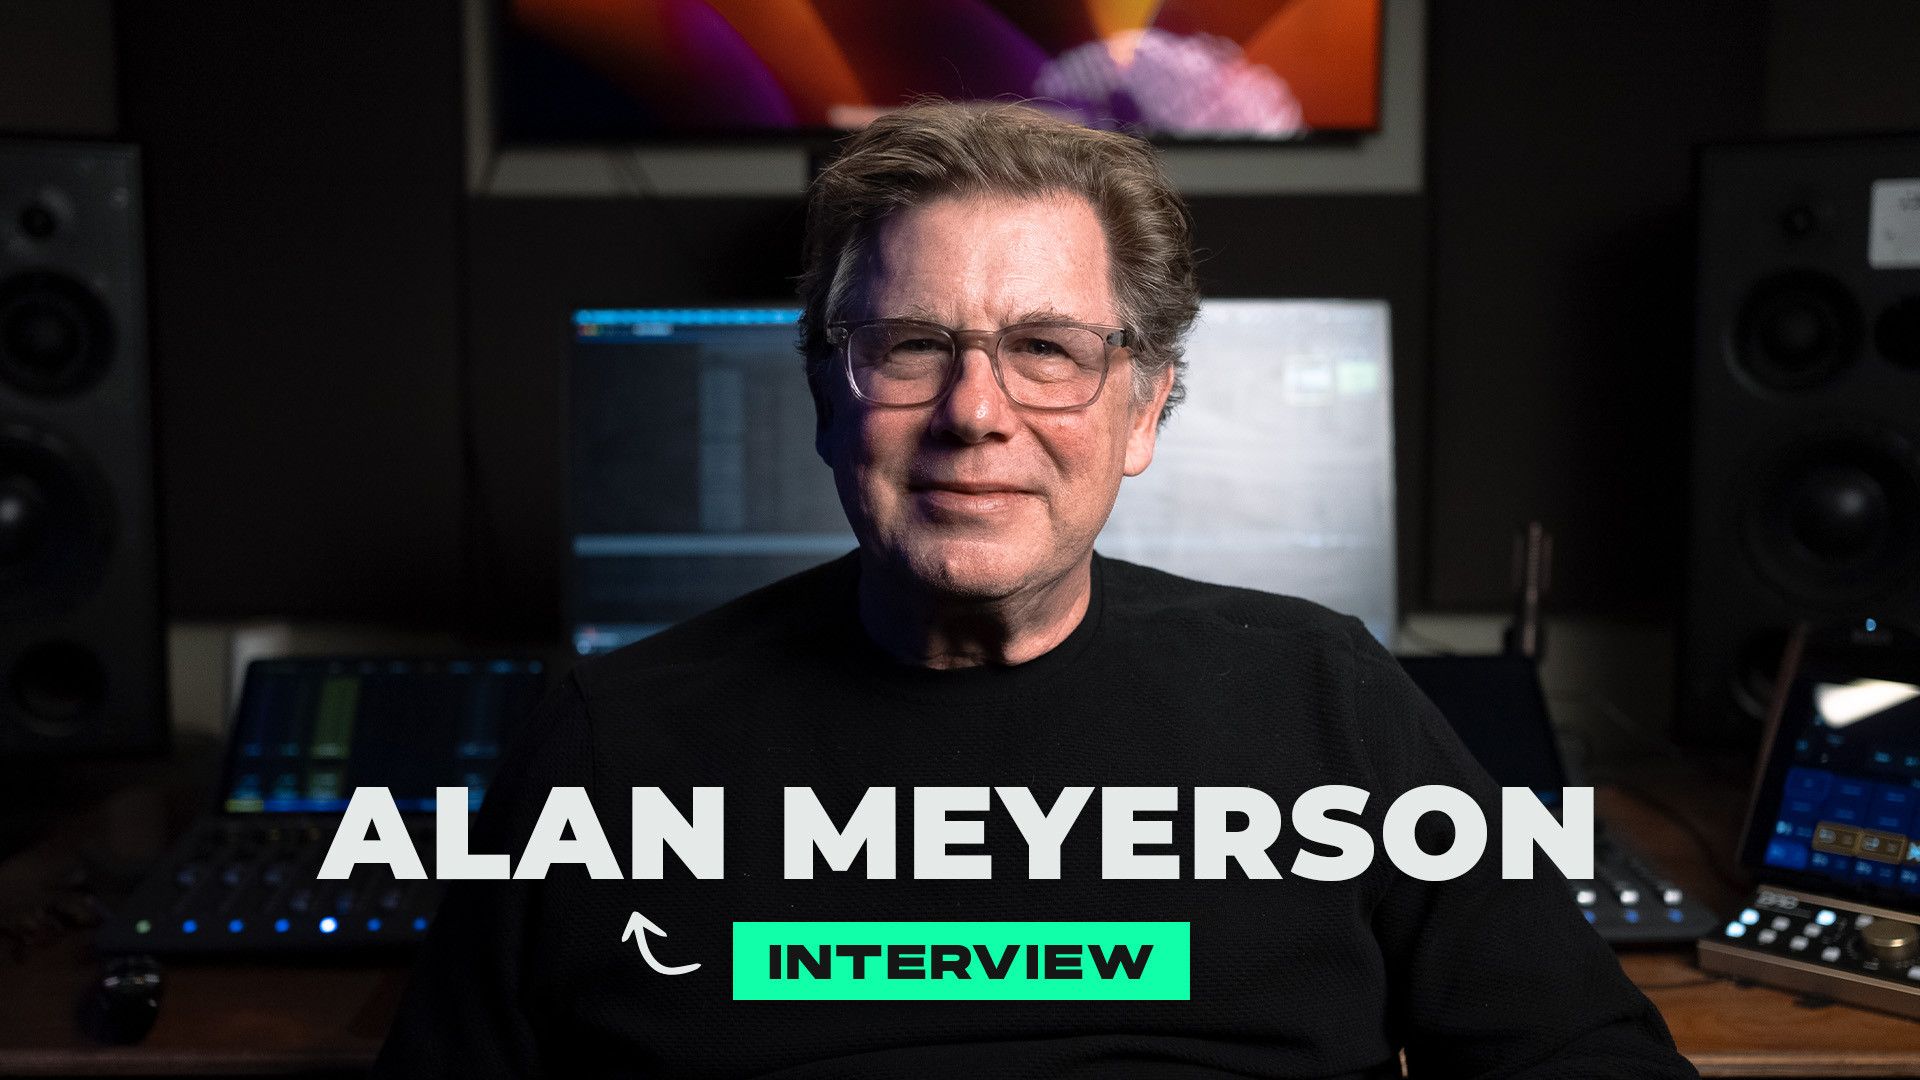 Alan Meyerson Interview